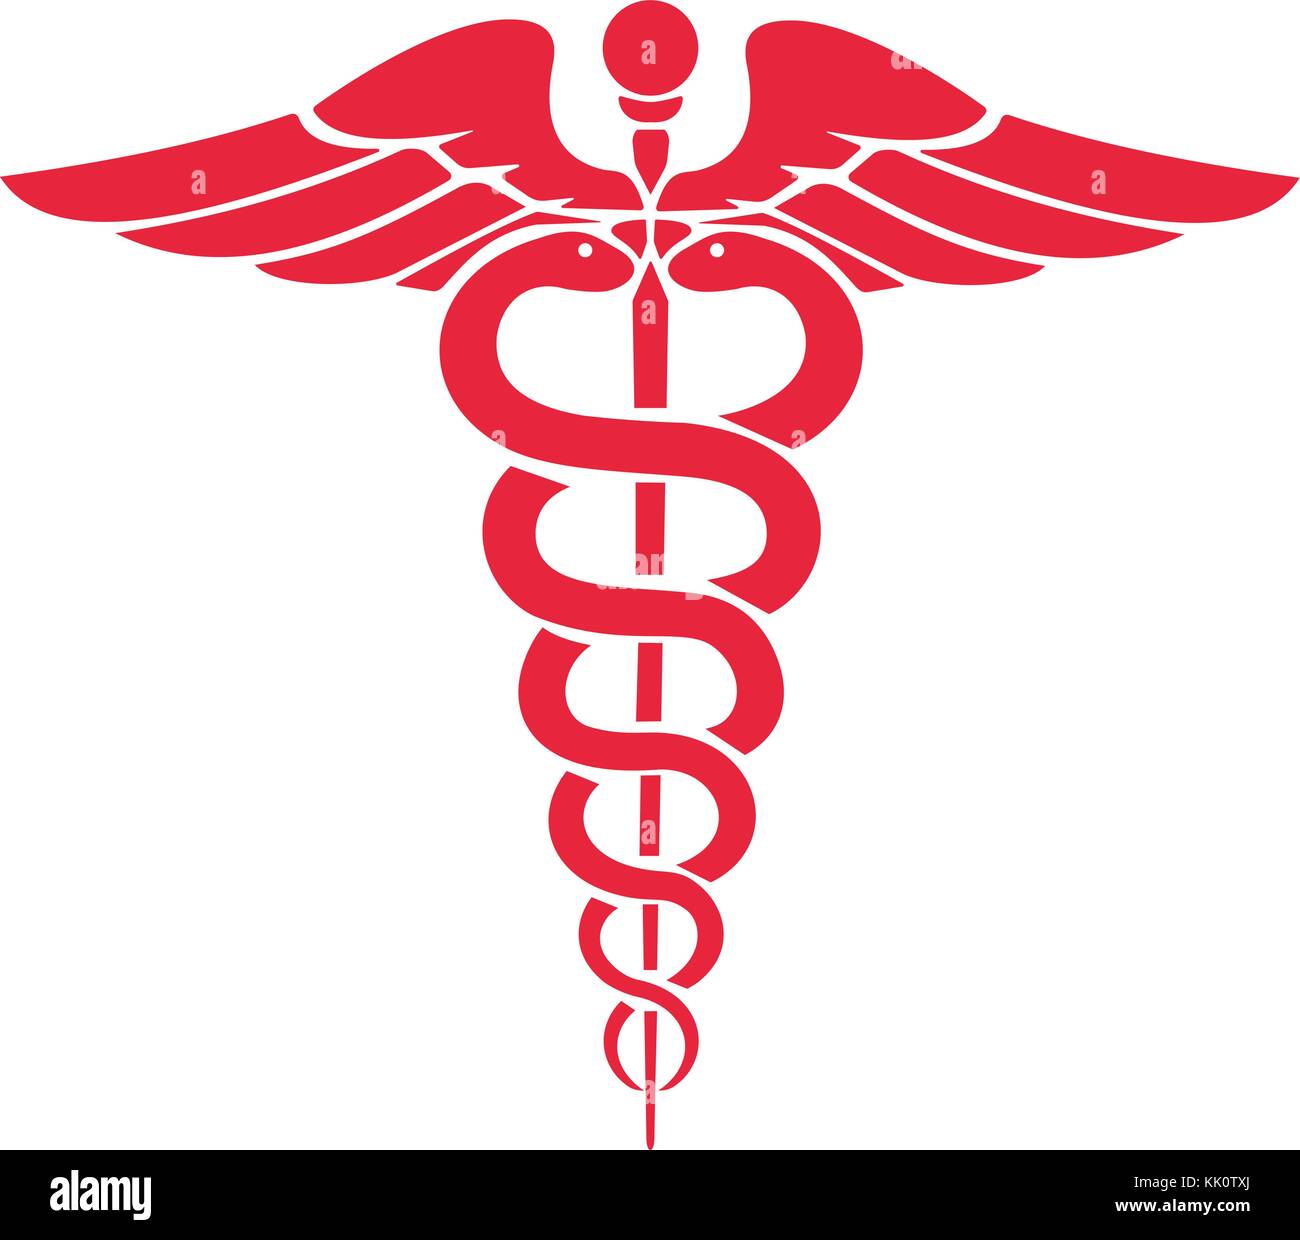 Знак карин. Символ медицины. Медицинский логотип. Медицинские символы. Военно-медицинские эмблемы.